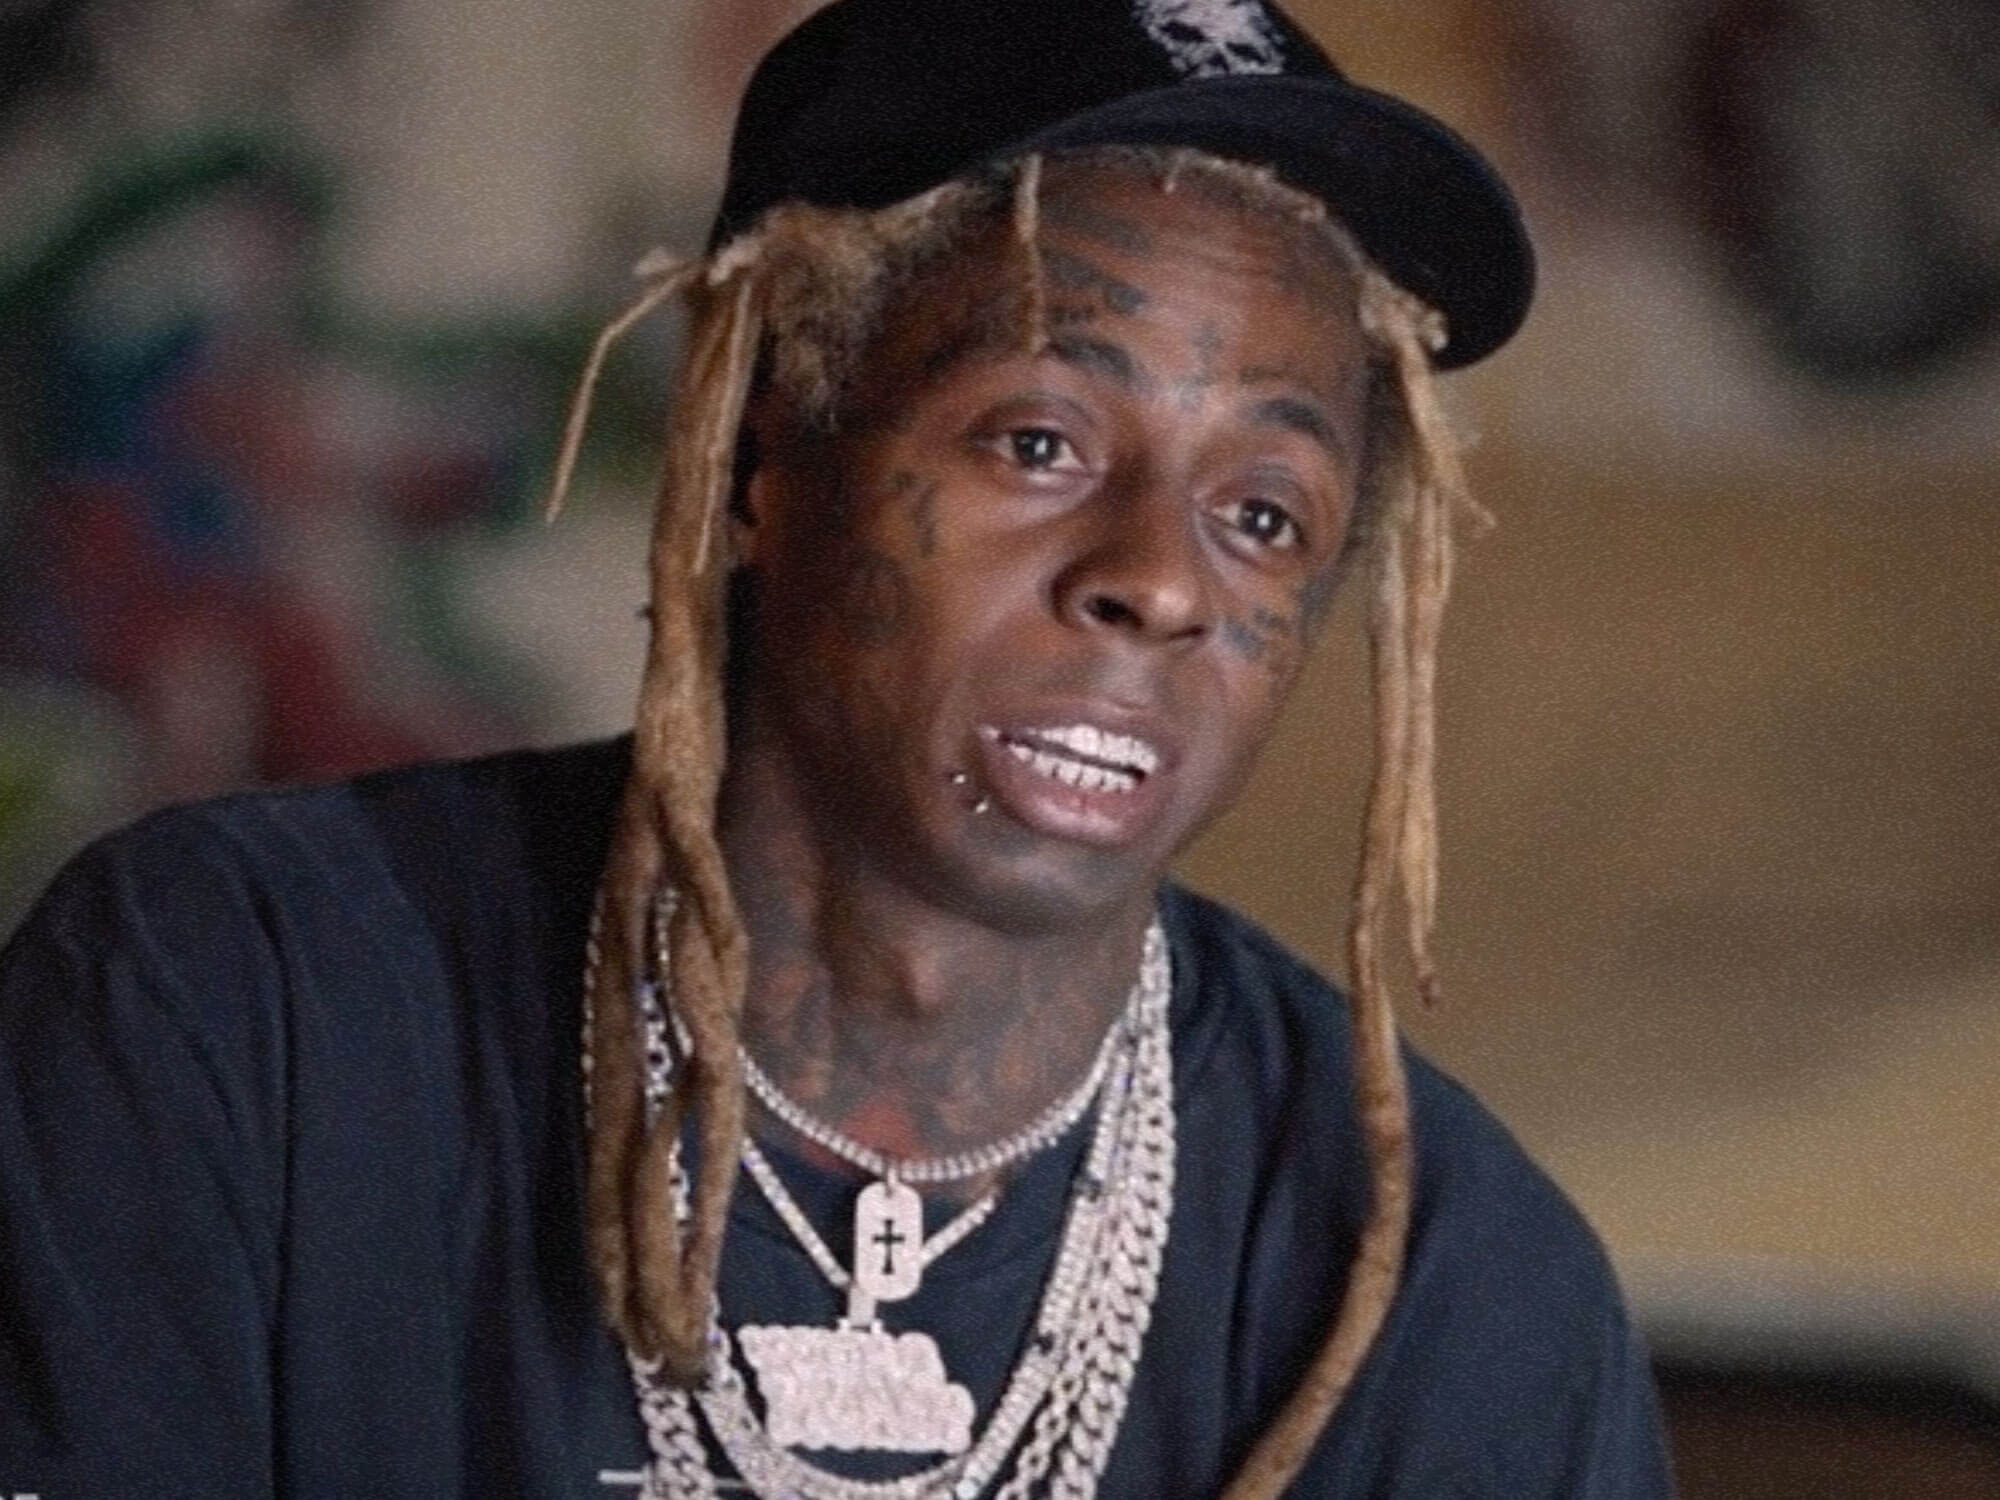 Lil Wayne in MIXTAPE documentary